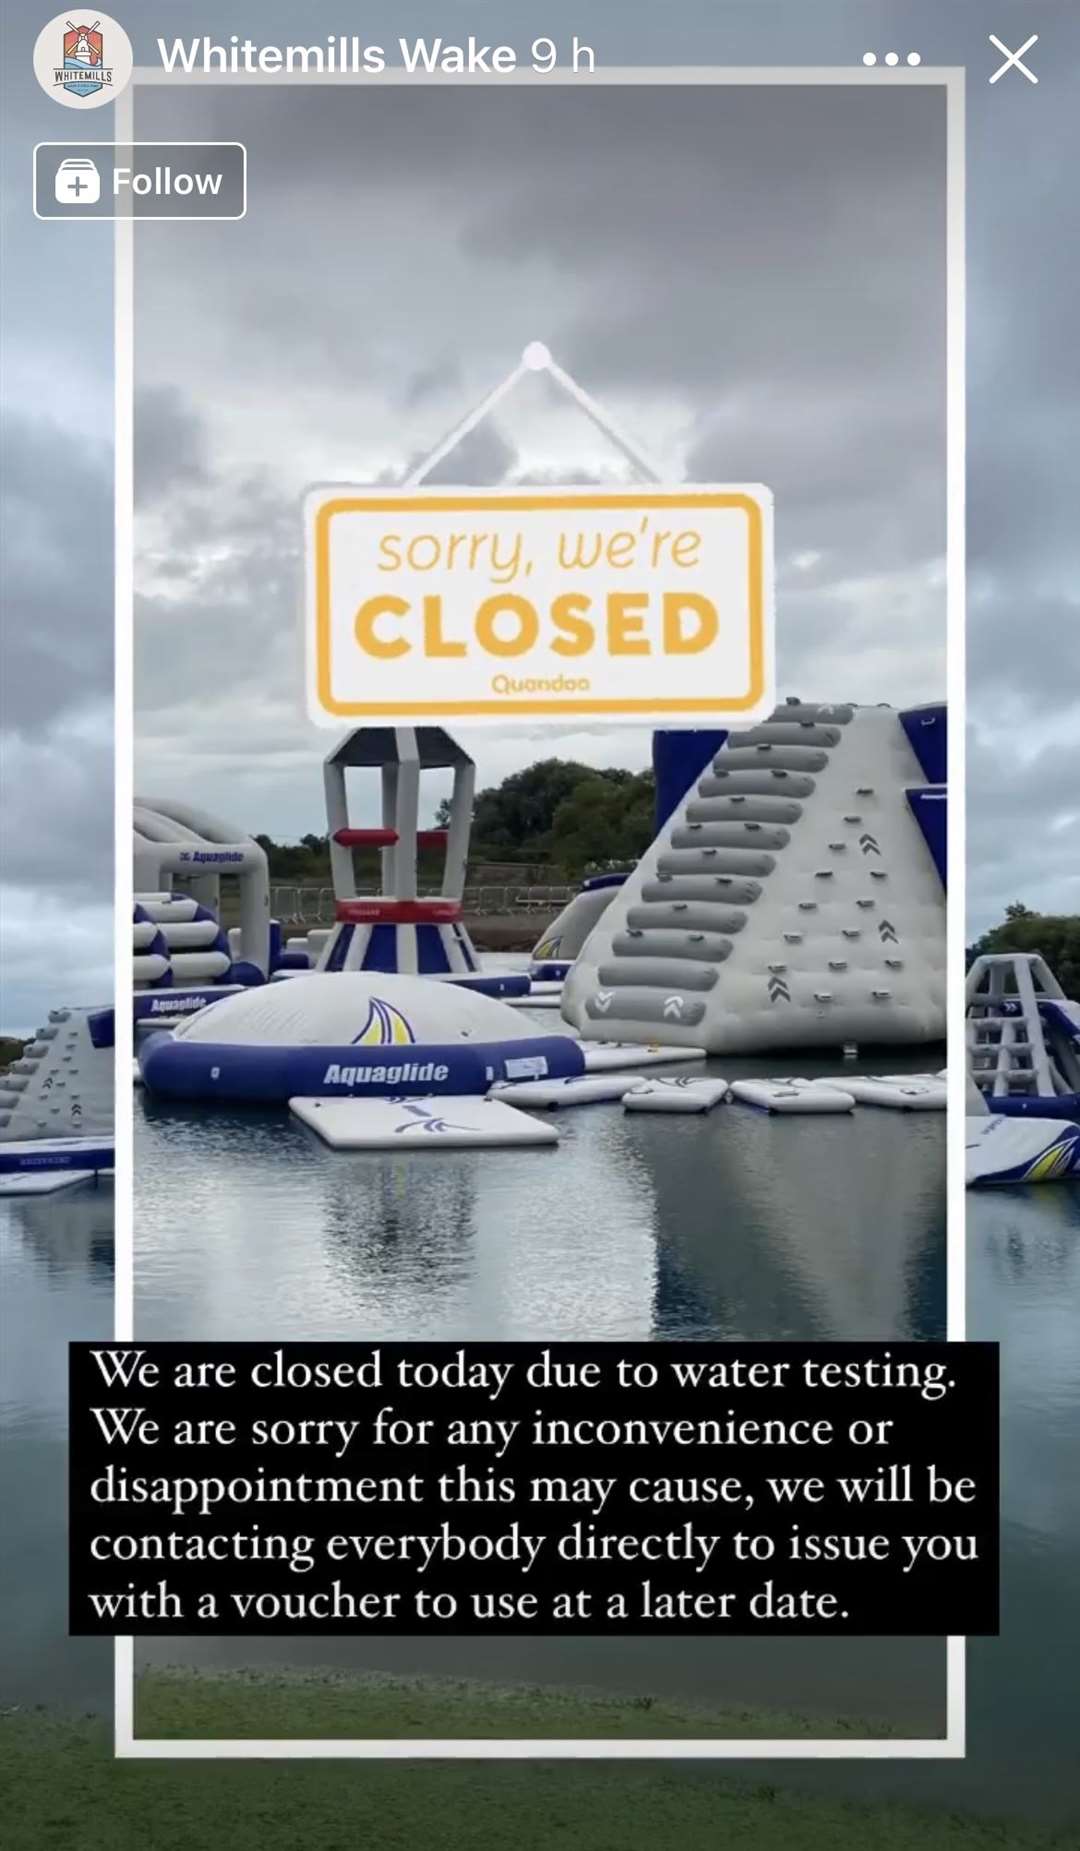 Whitemills Water Park announced its closure on Facebook last week